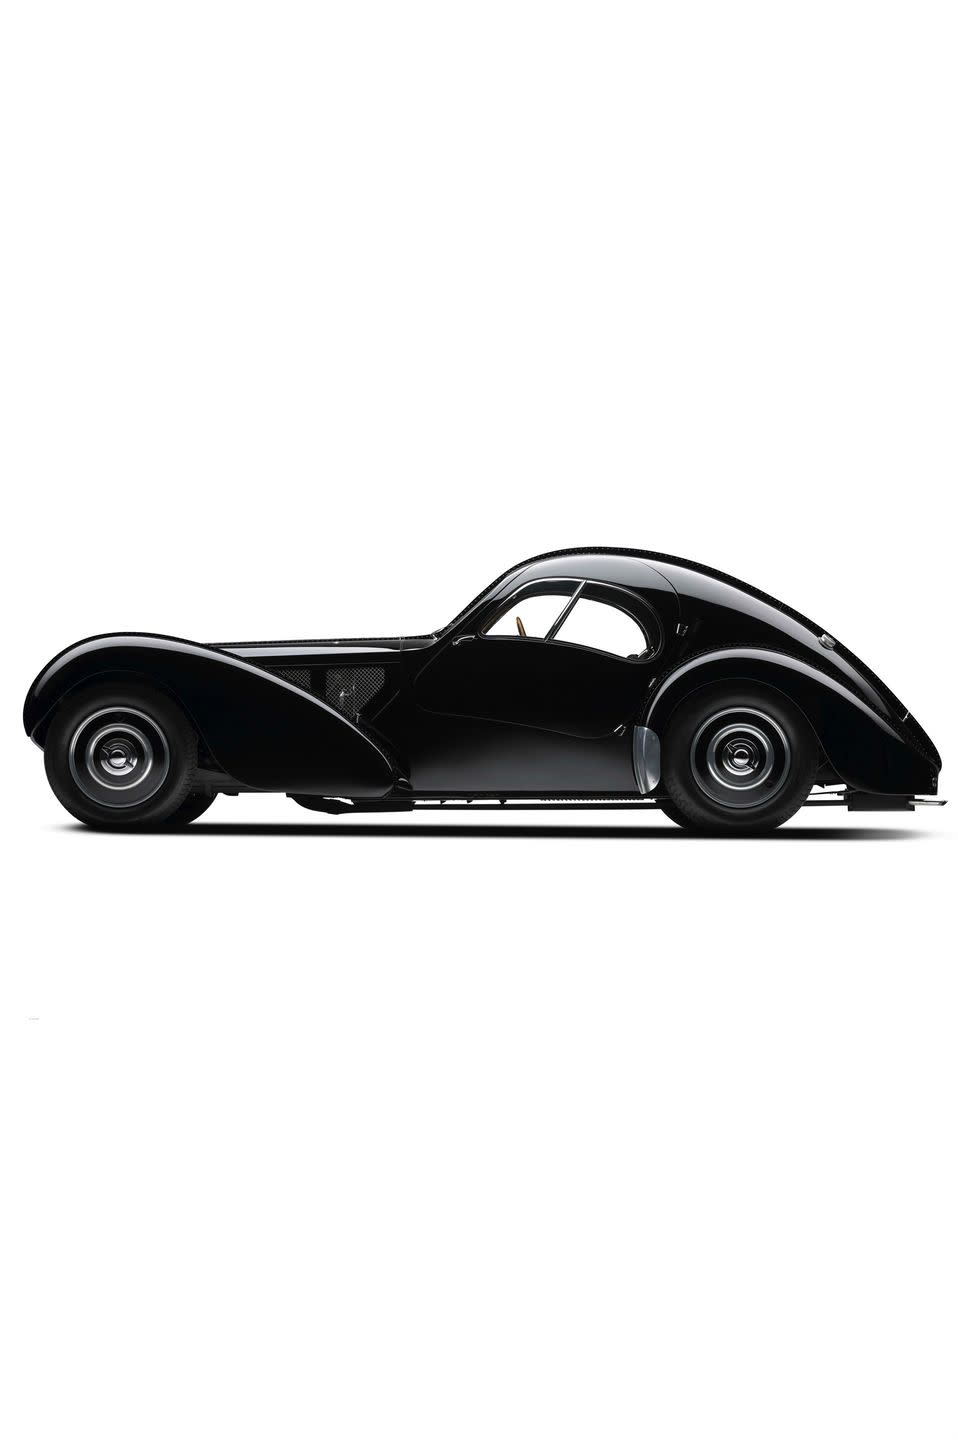 1936: Bugatti Type 57 SC Atlantic